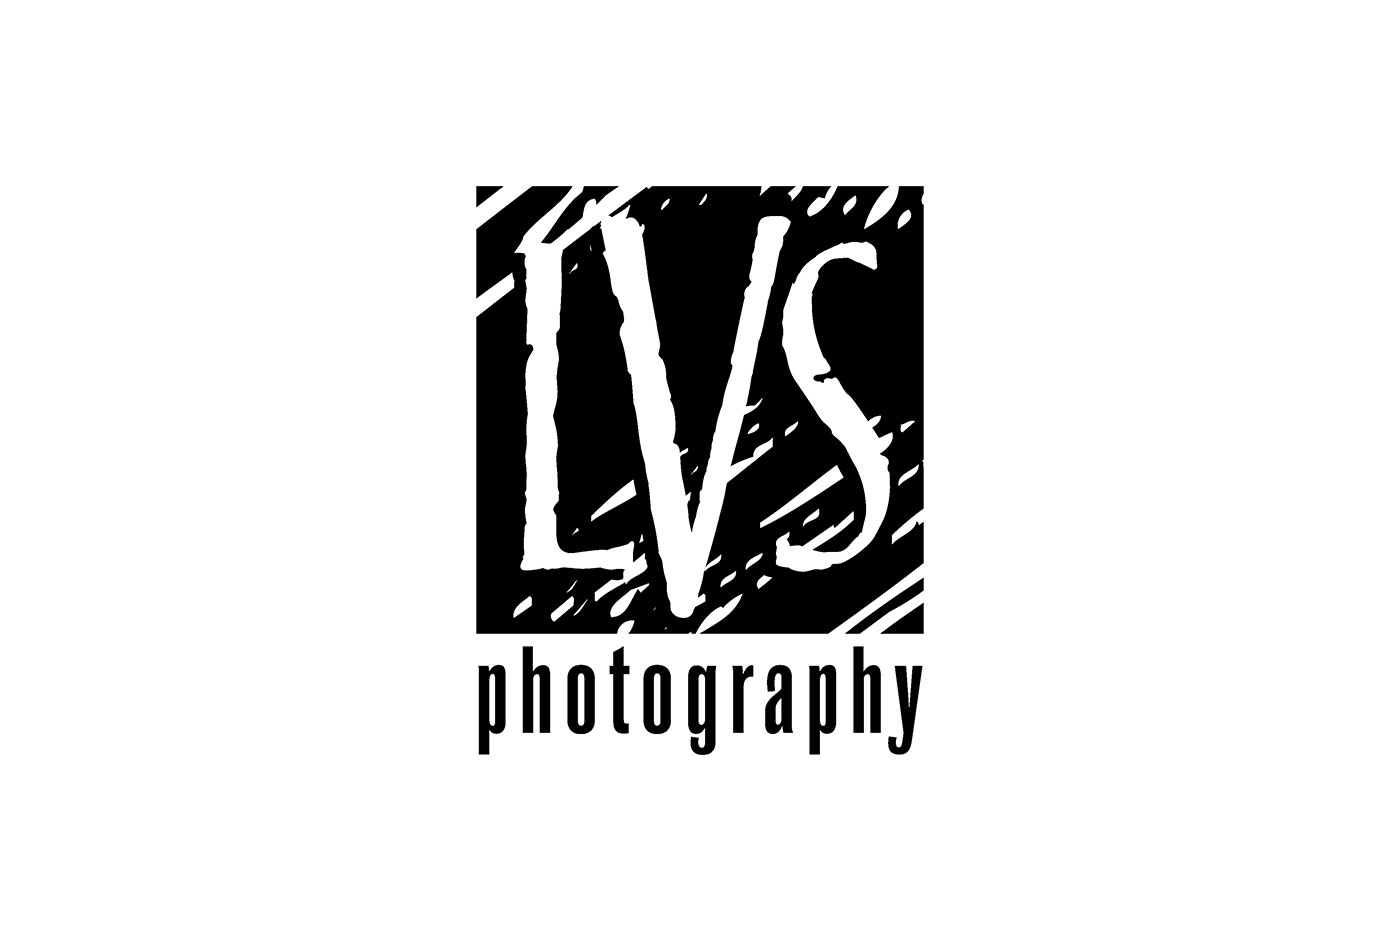 LVS Photography